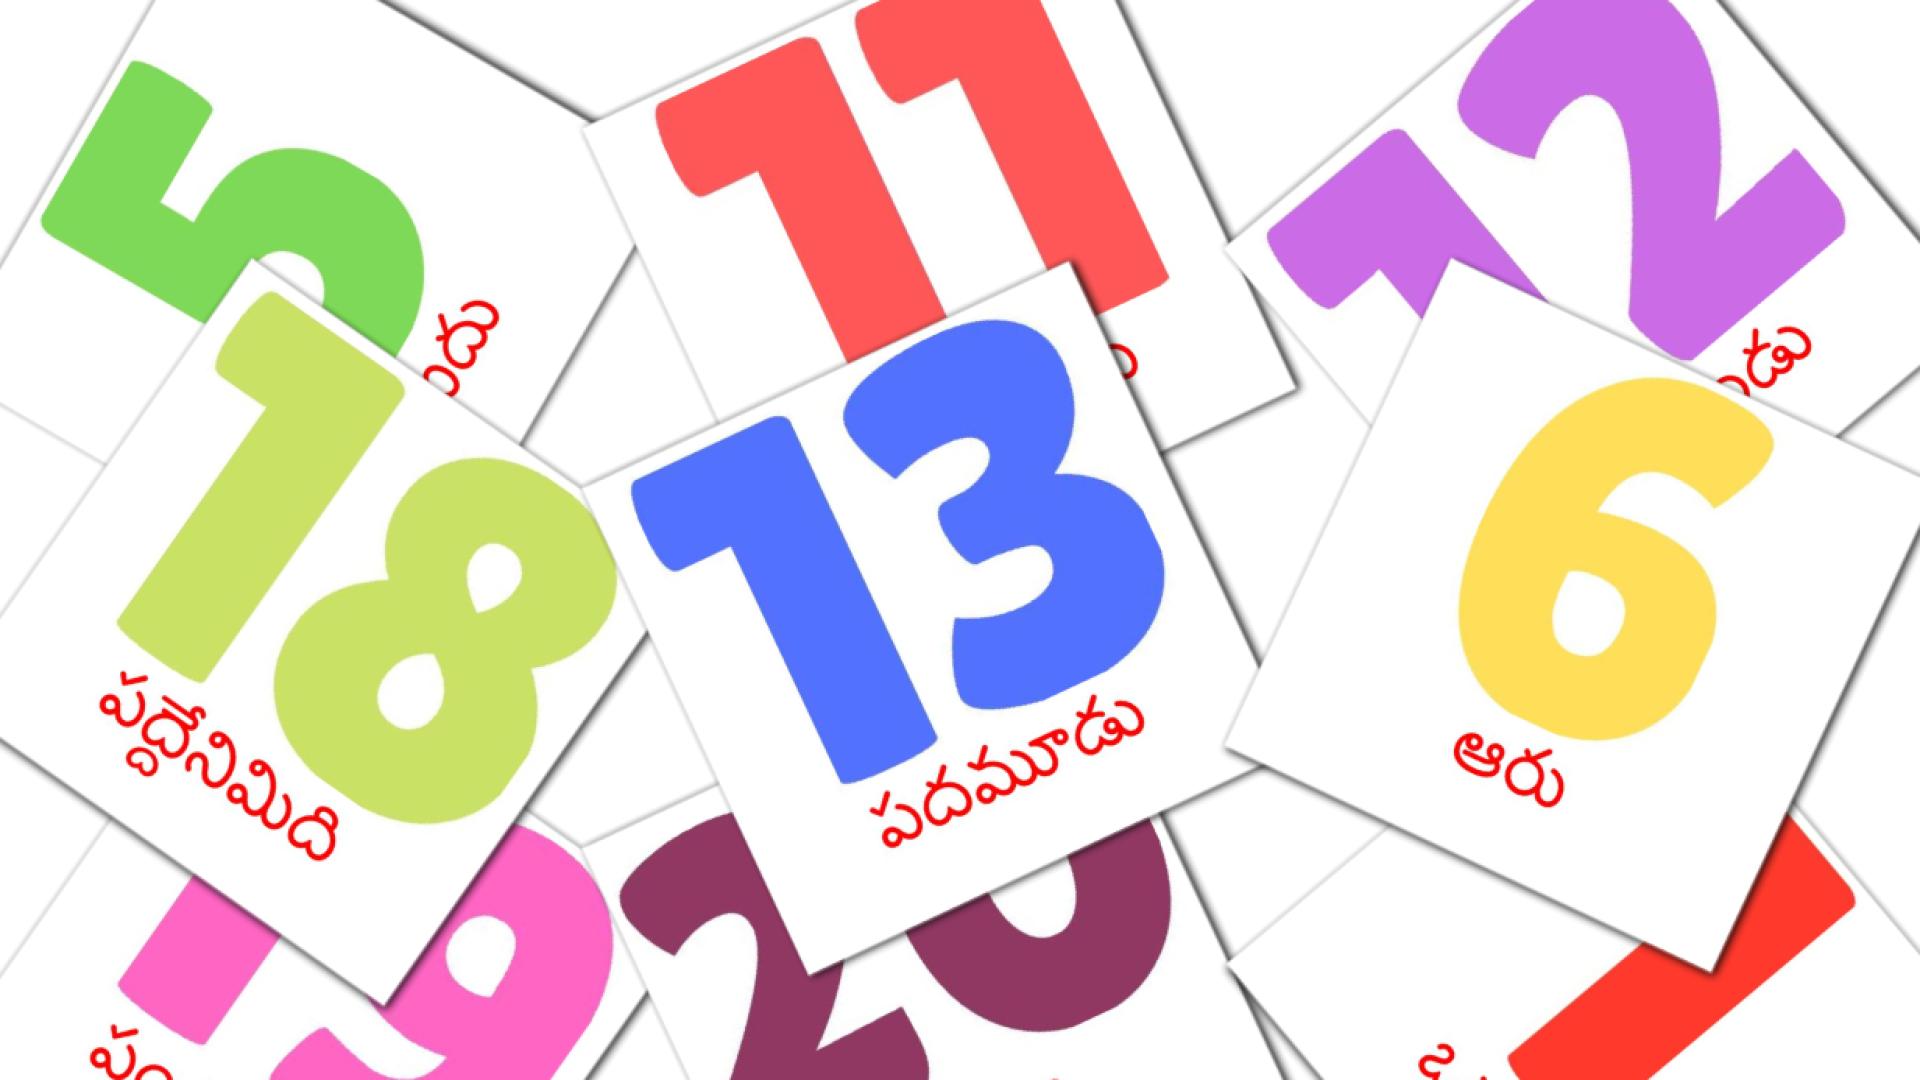 20 tarjetas didacticas de సంఖ్యలు (1-20)